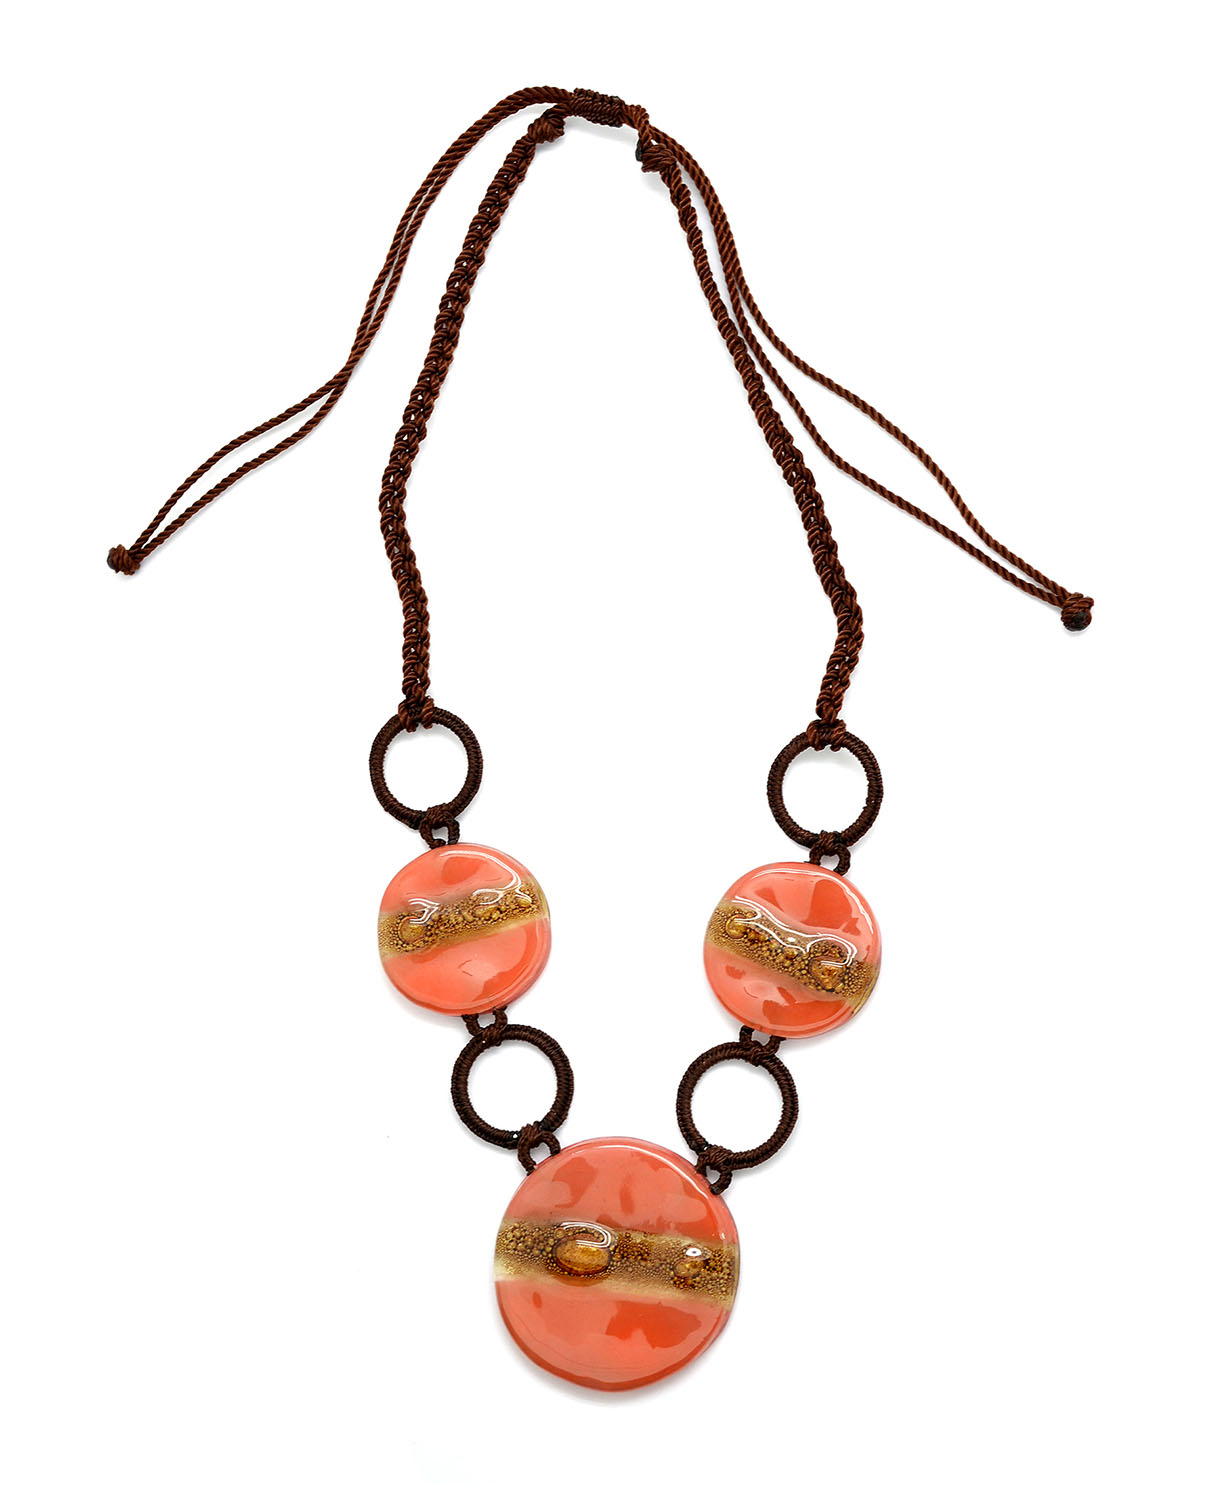 Bib necklace with adjustable strap 
															/ Dunitz & Co.							